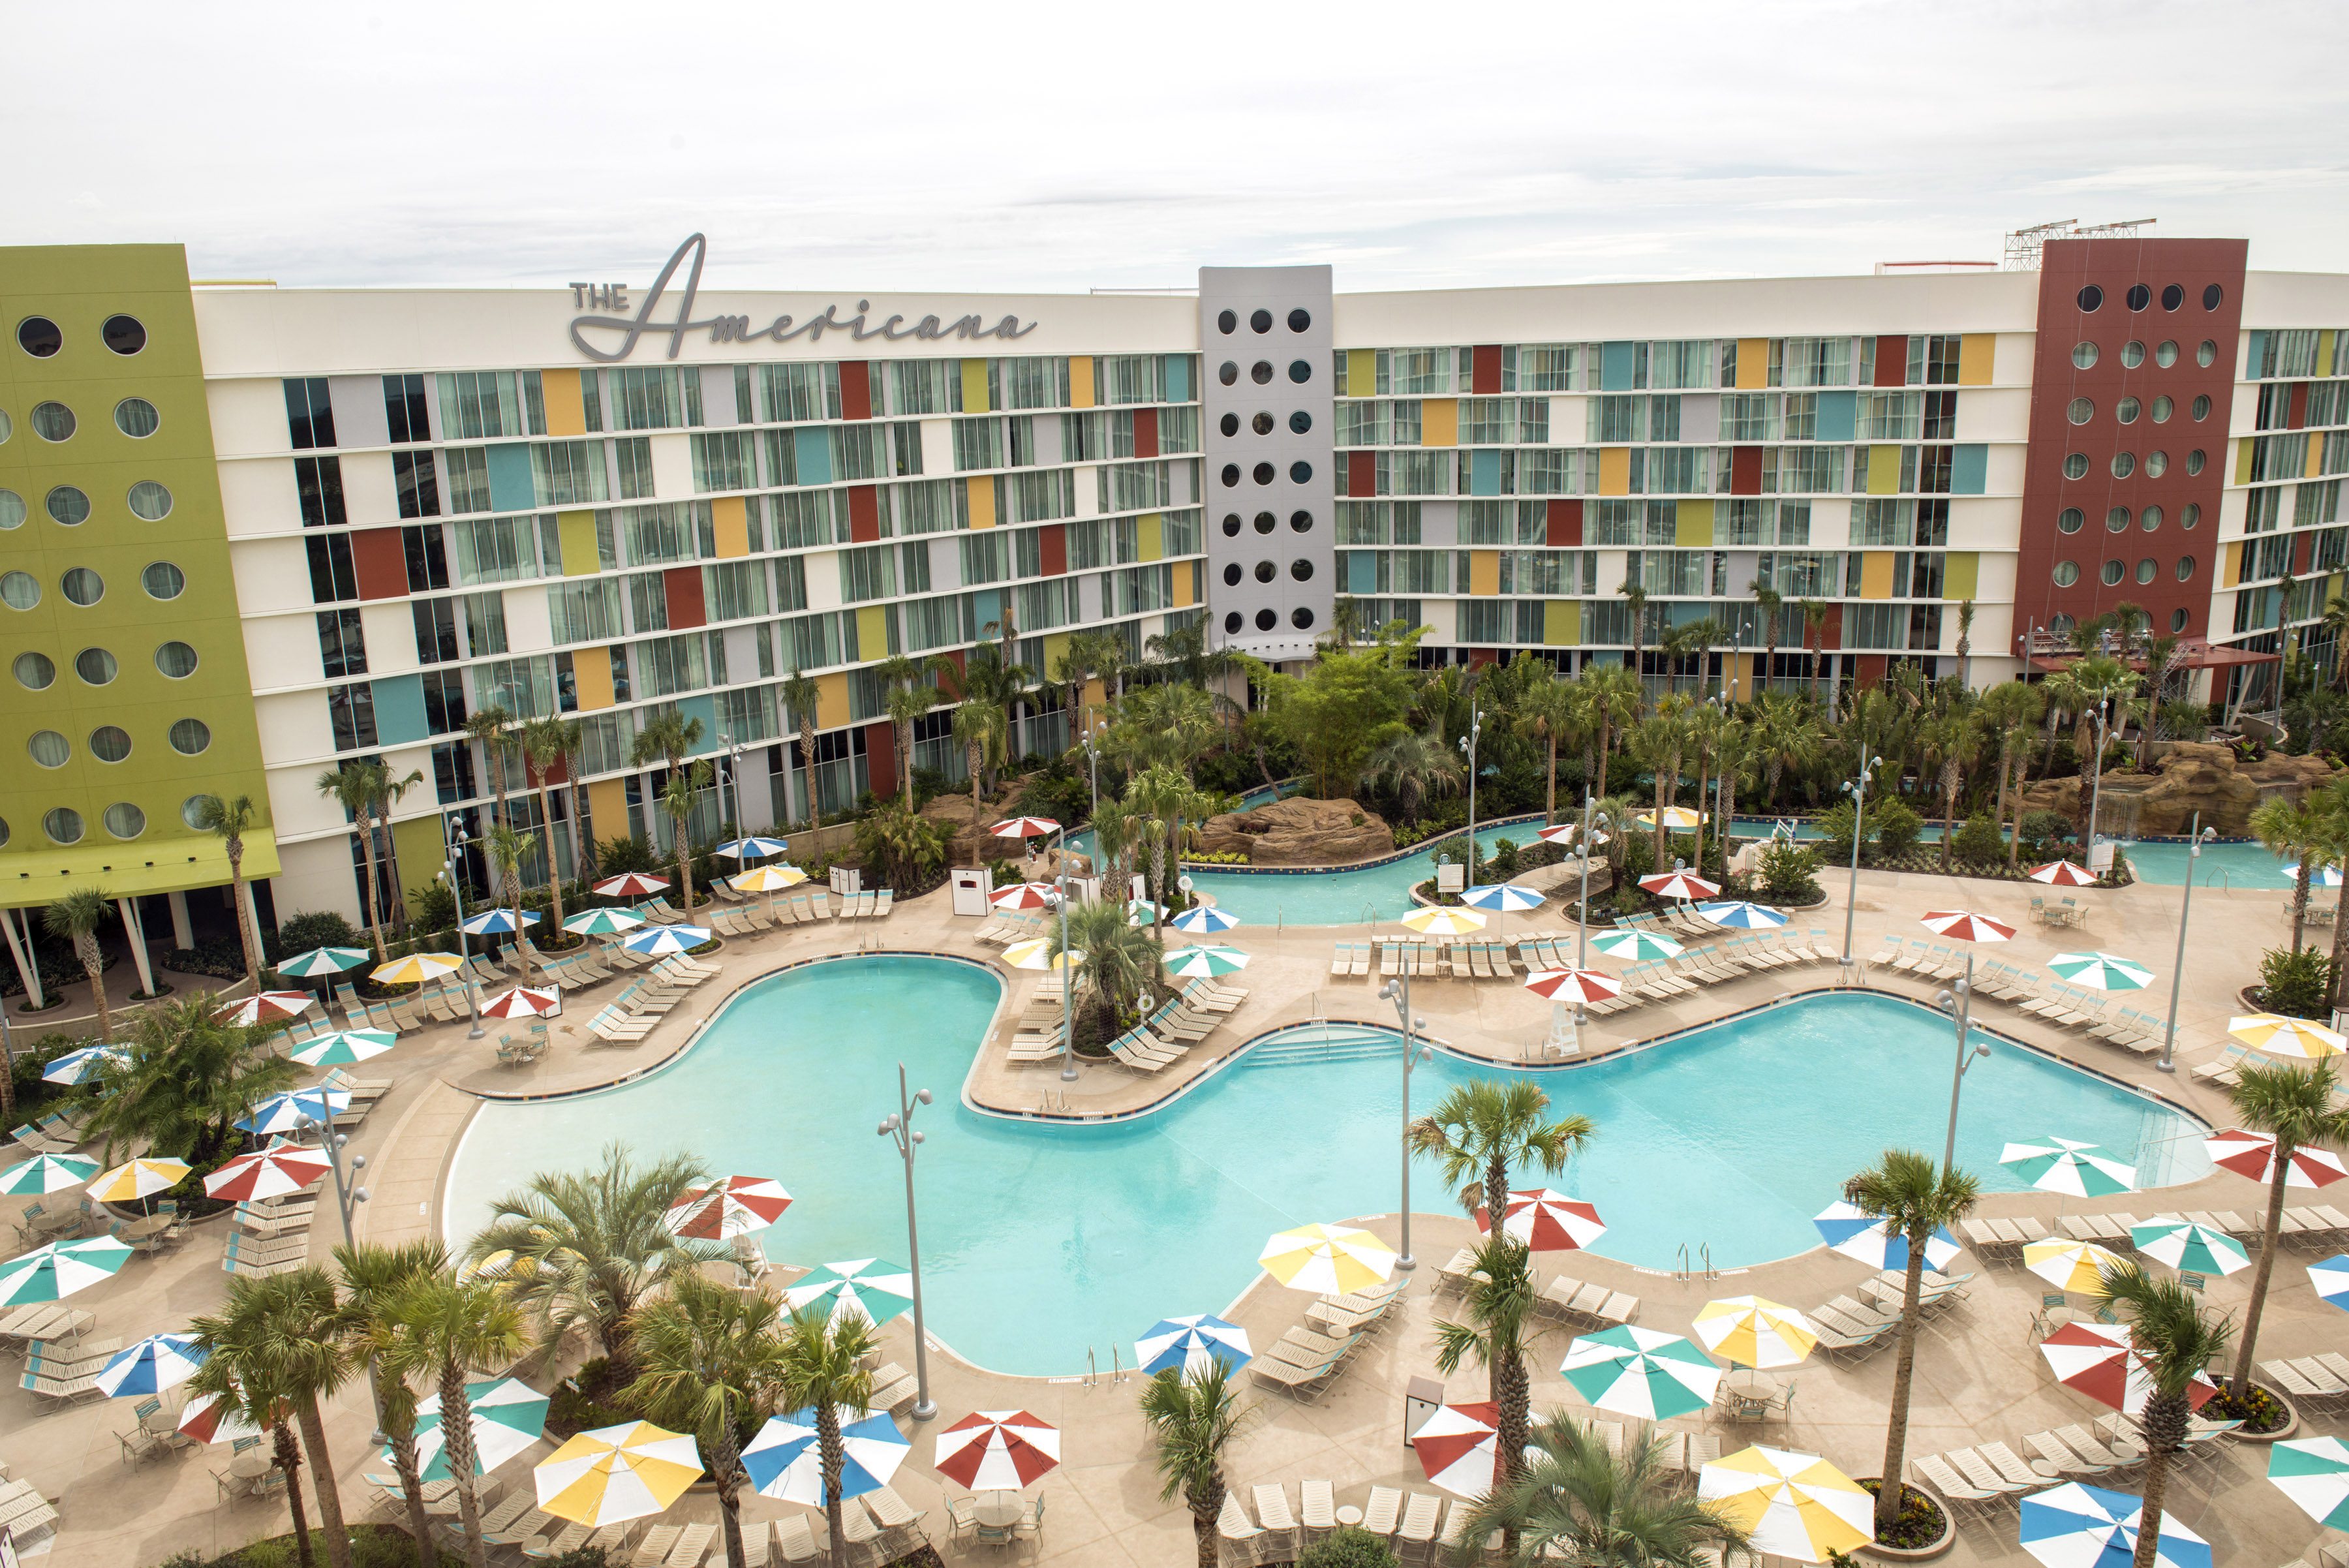 Cabana Bay Beach Resort Quieter Pool  Image courtesy of Universal Orlando Resort